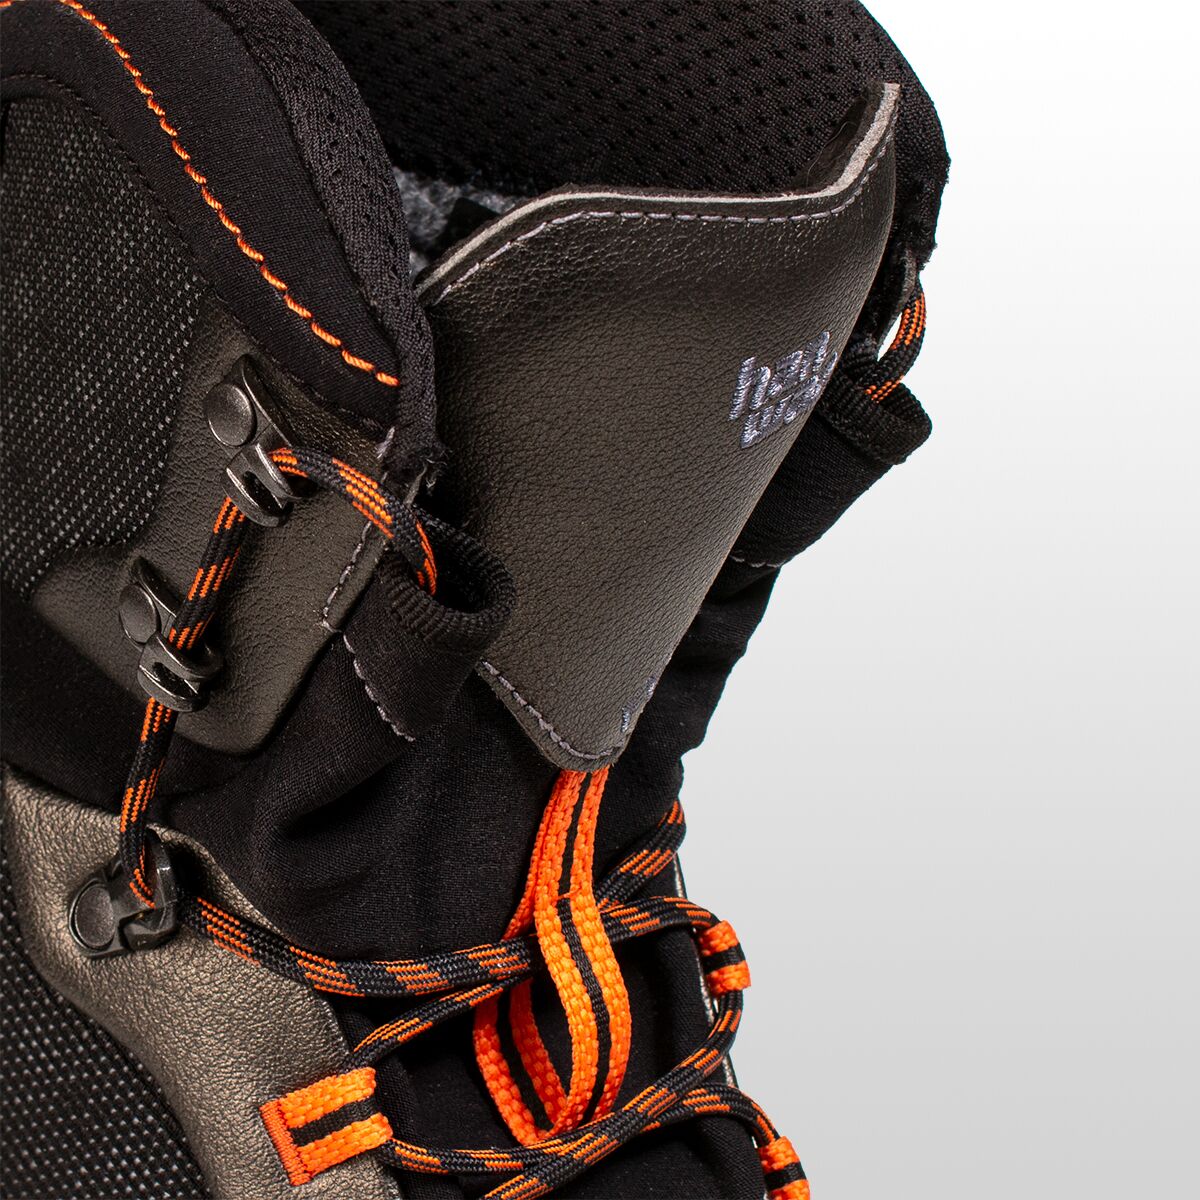 Men's Hanwag Ferrata II GTX Backpacking Boot